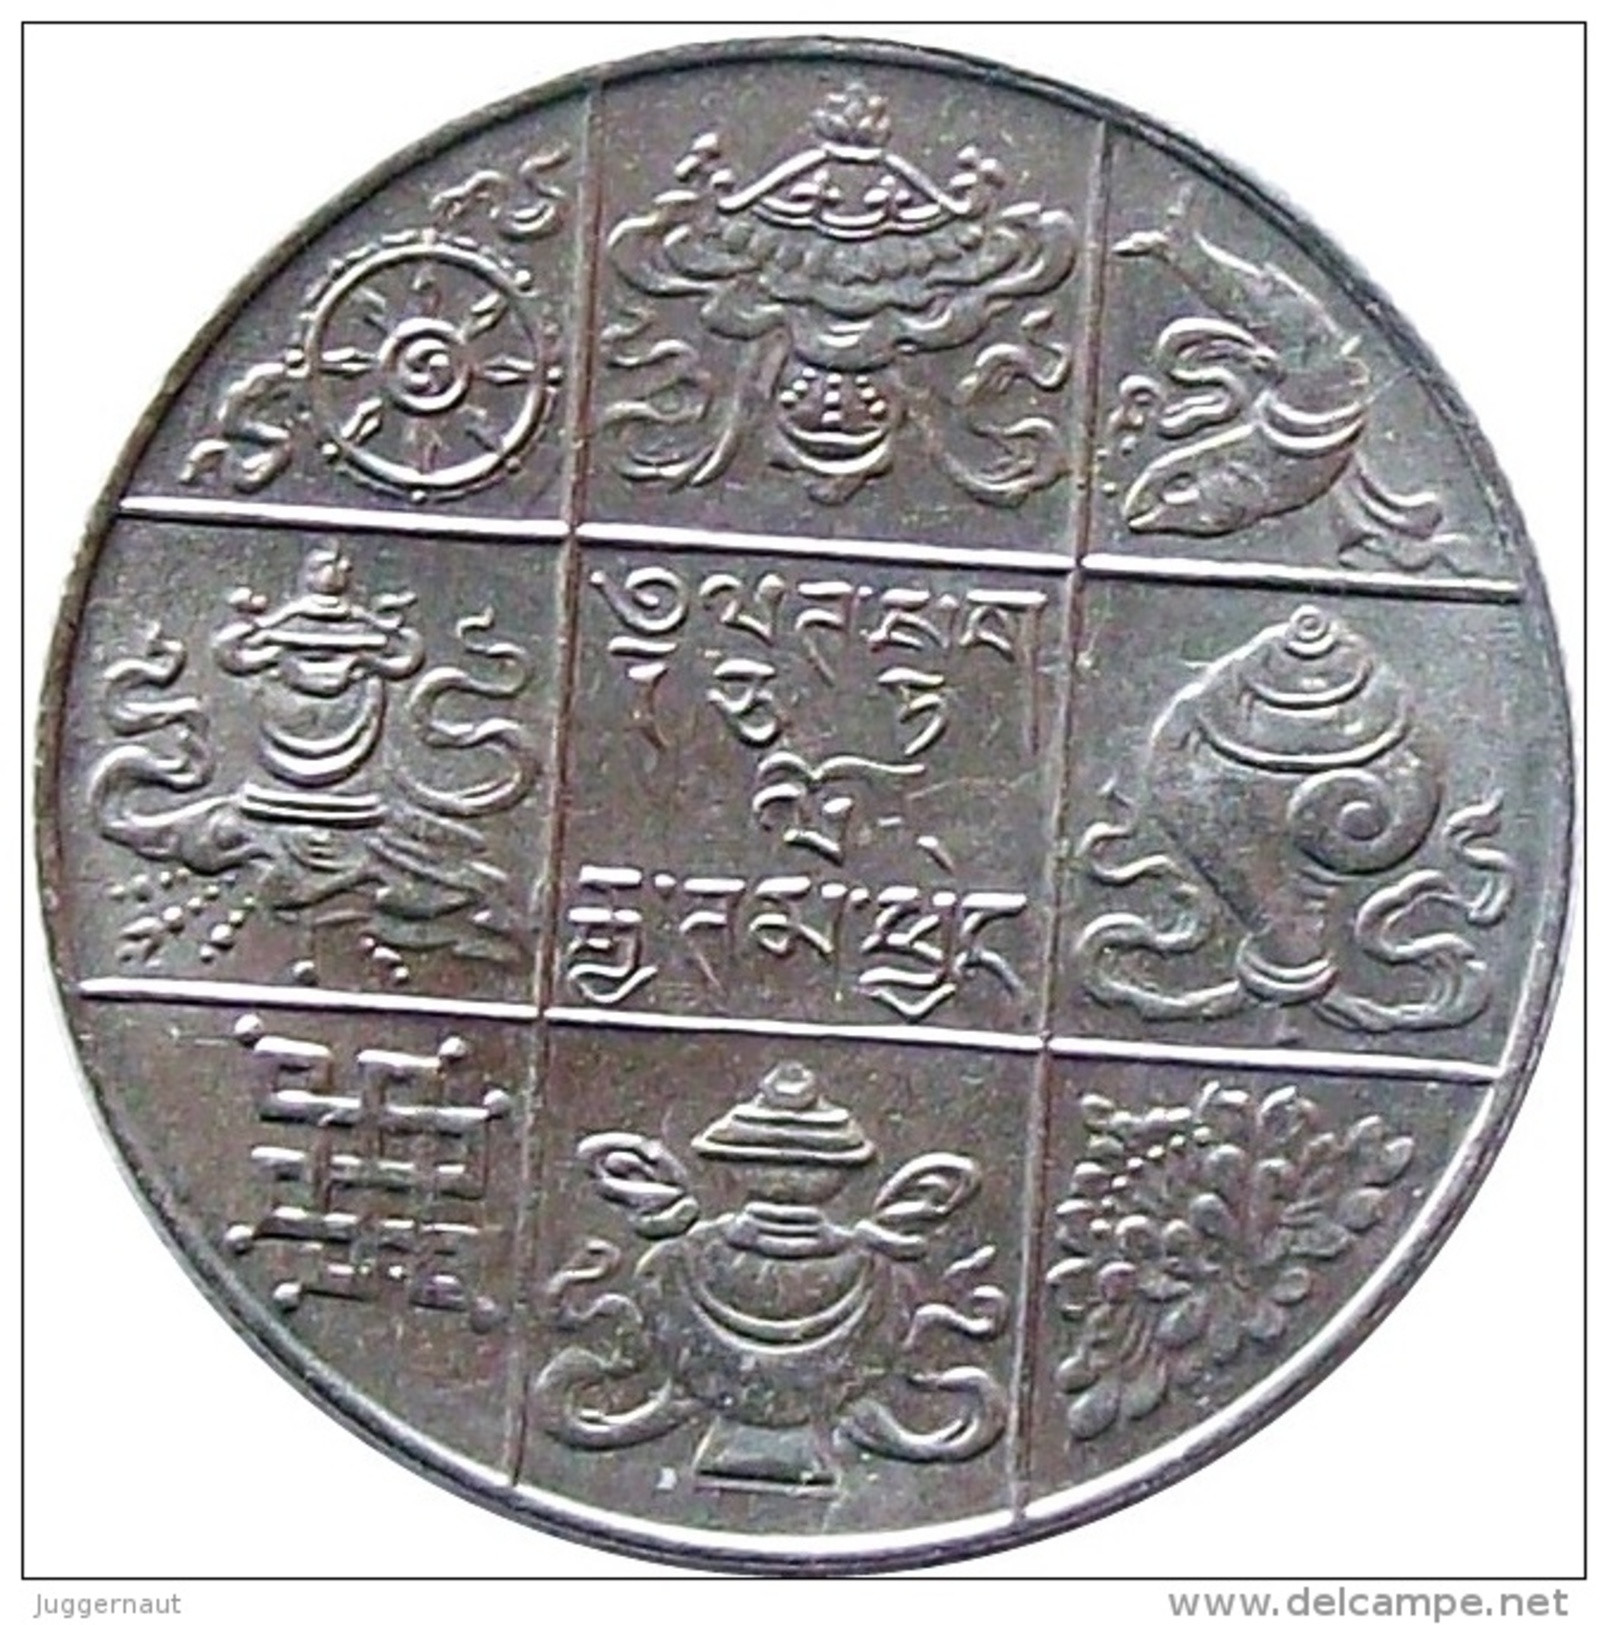 BHUTAN 1955 1/2-Rupee COPPER-NICKEL Coin KM-28.2 UNC - Butan